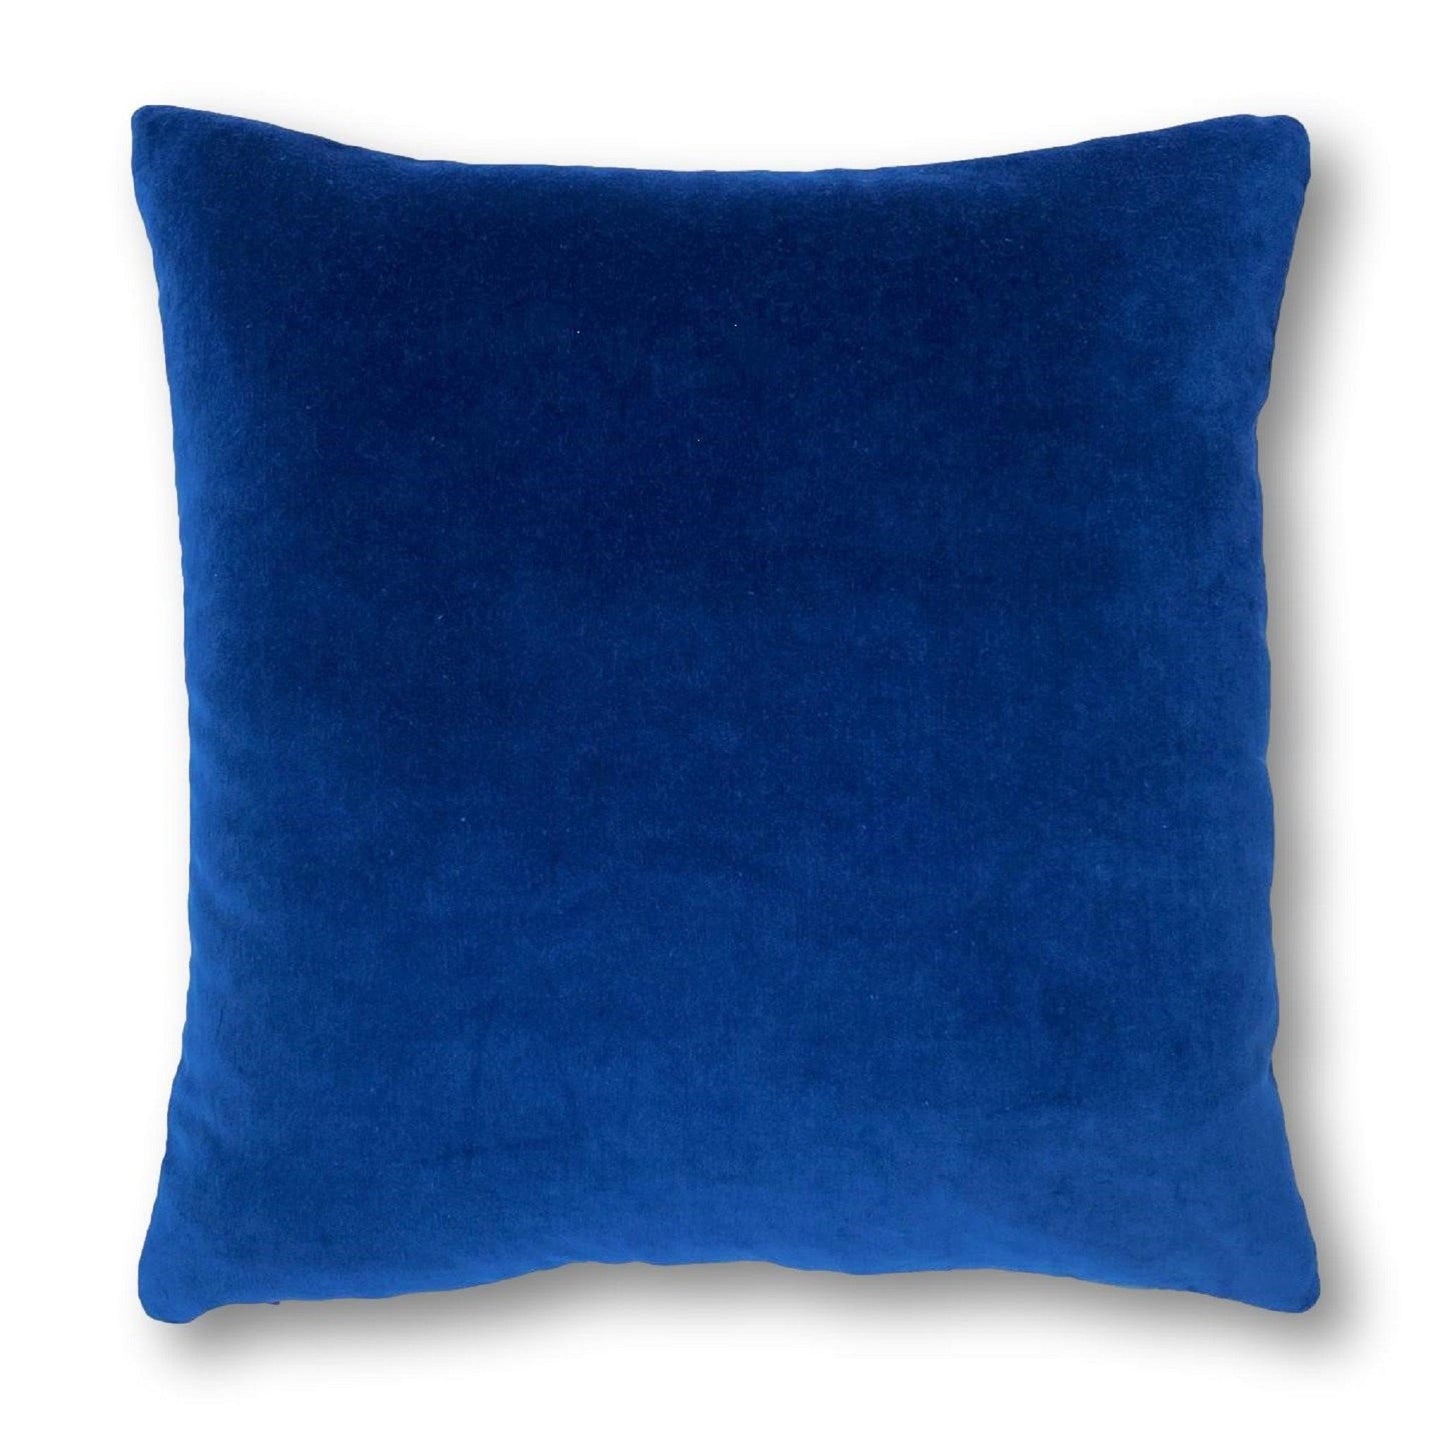 pink cushions and blue cushions uk